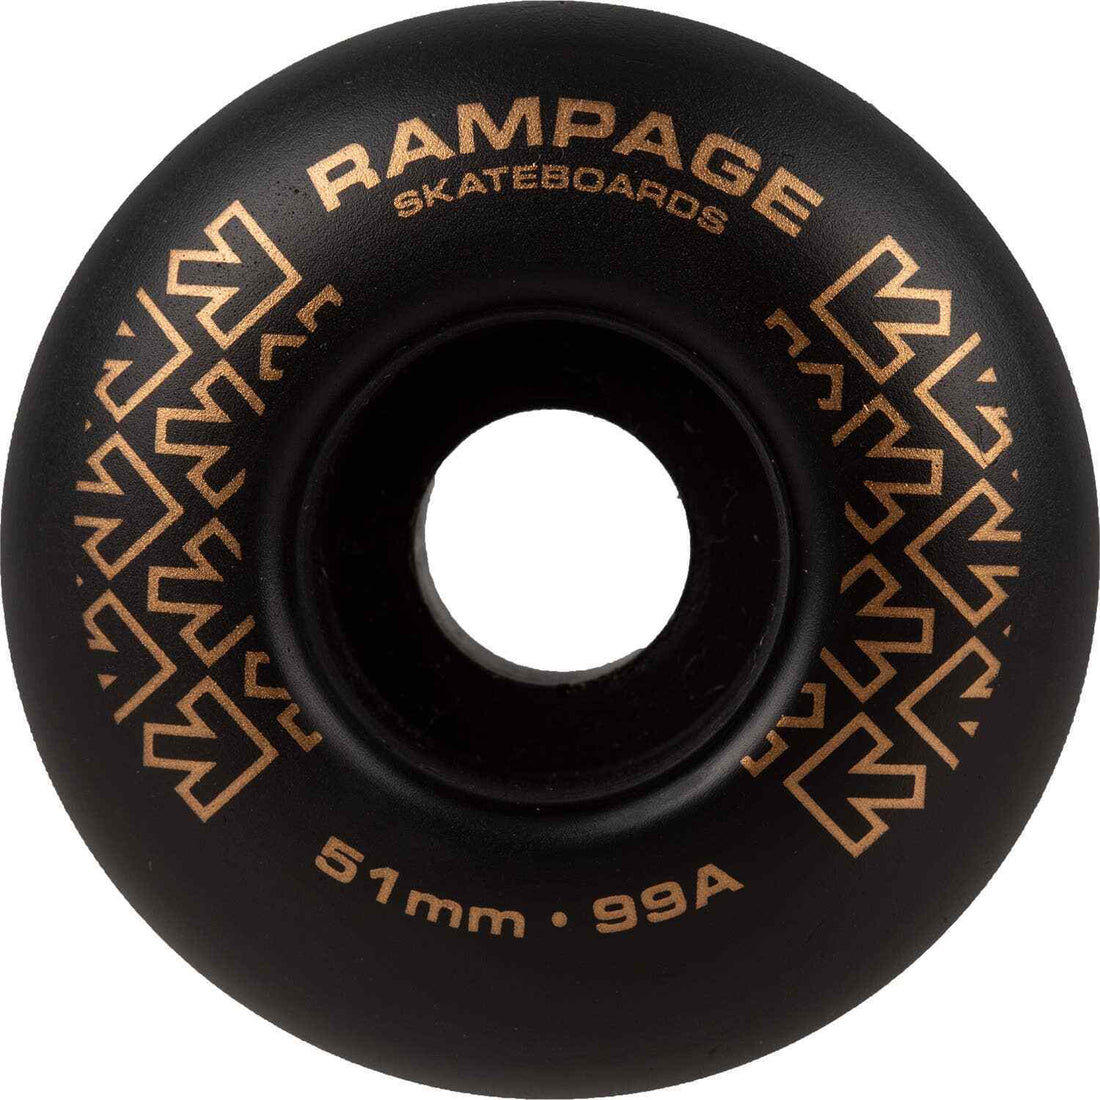 Rampage 99A Skateboard Wheels Black/Gold